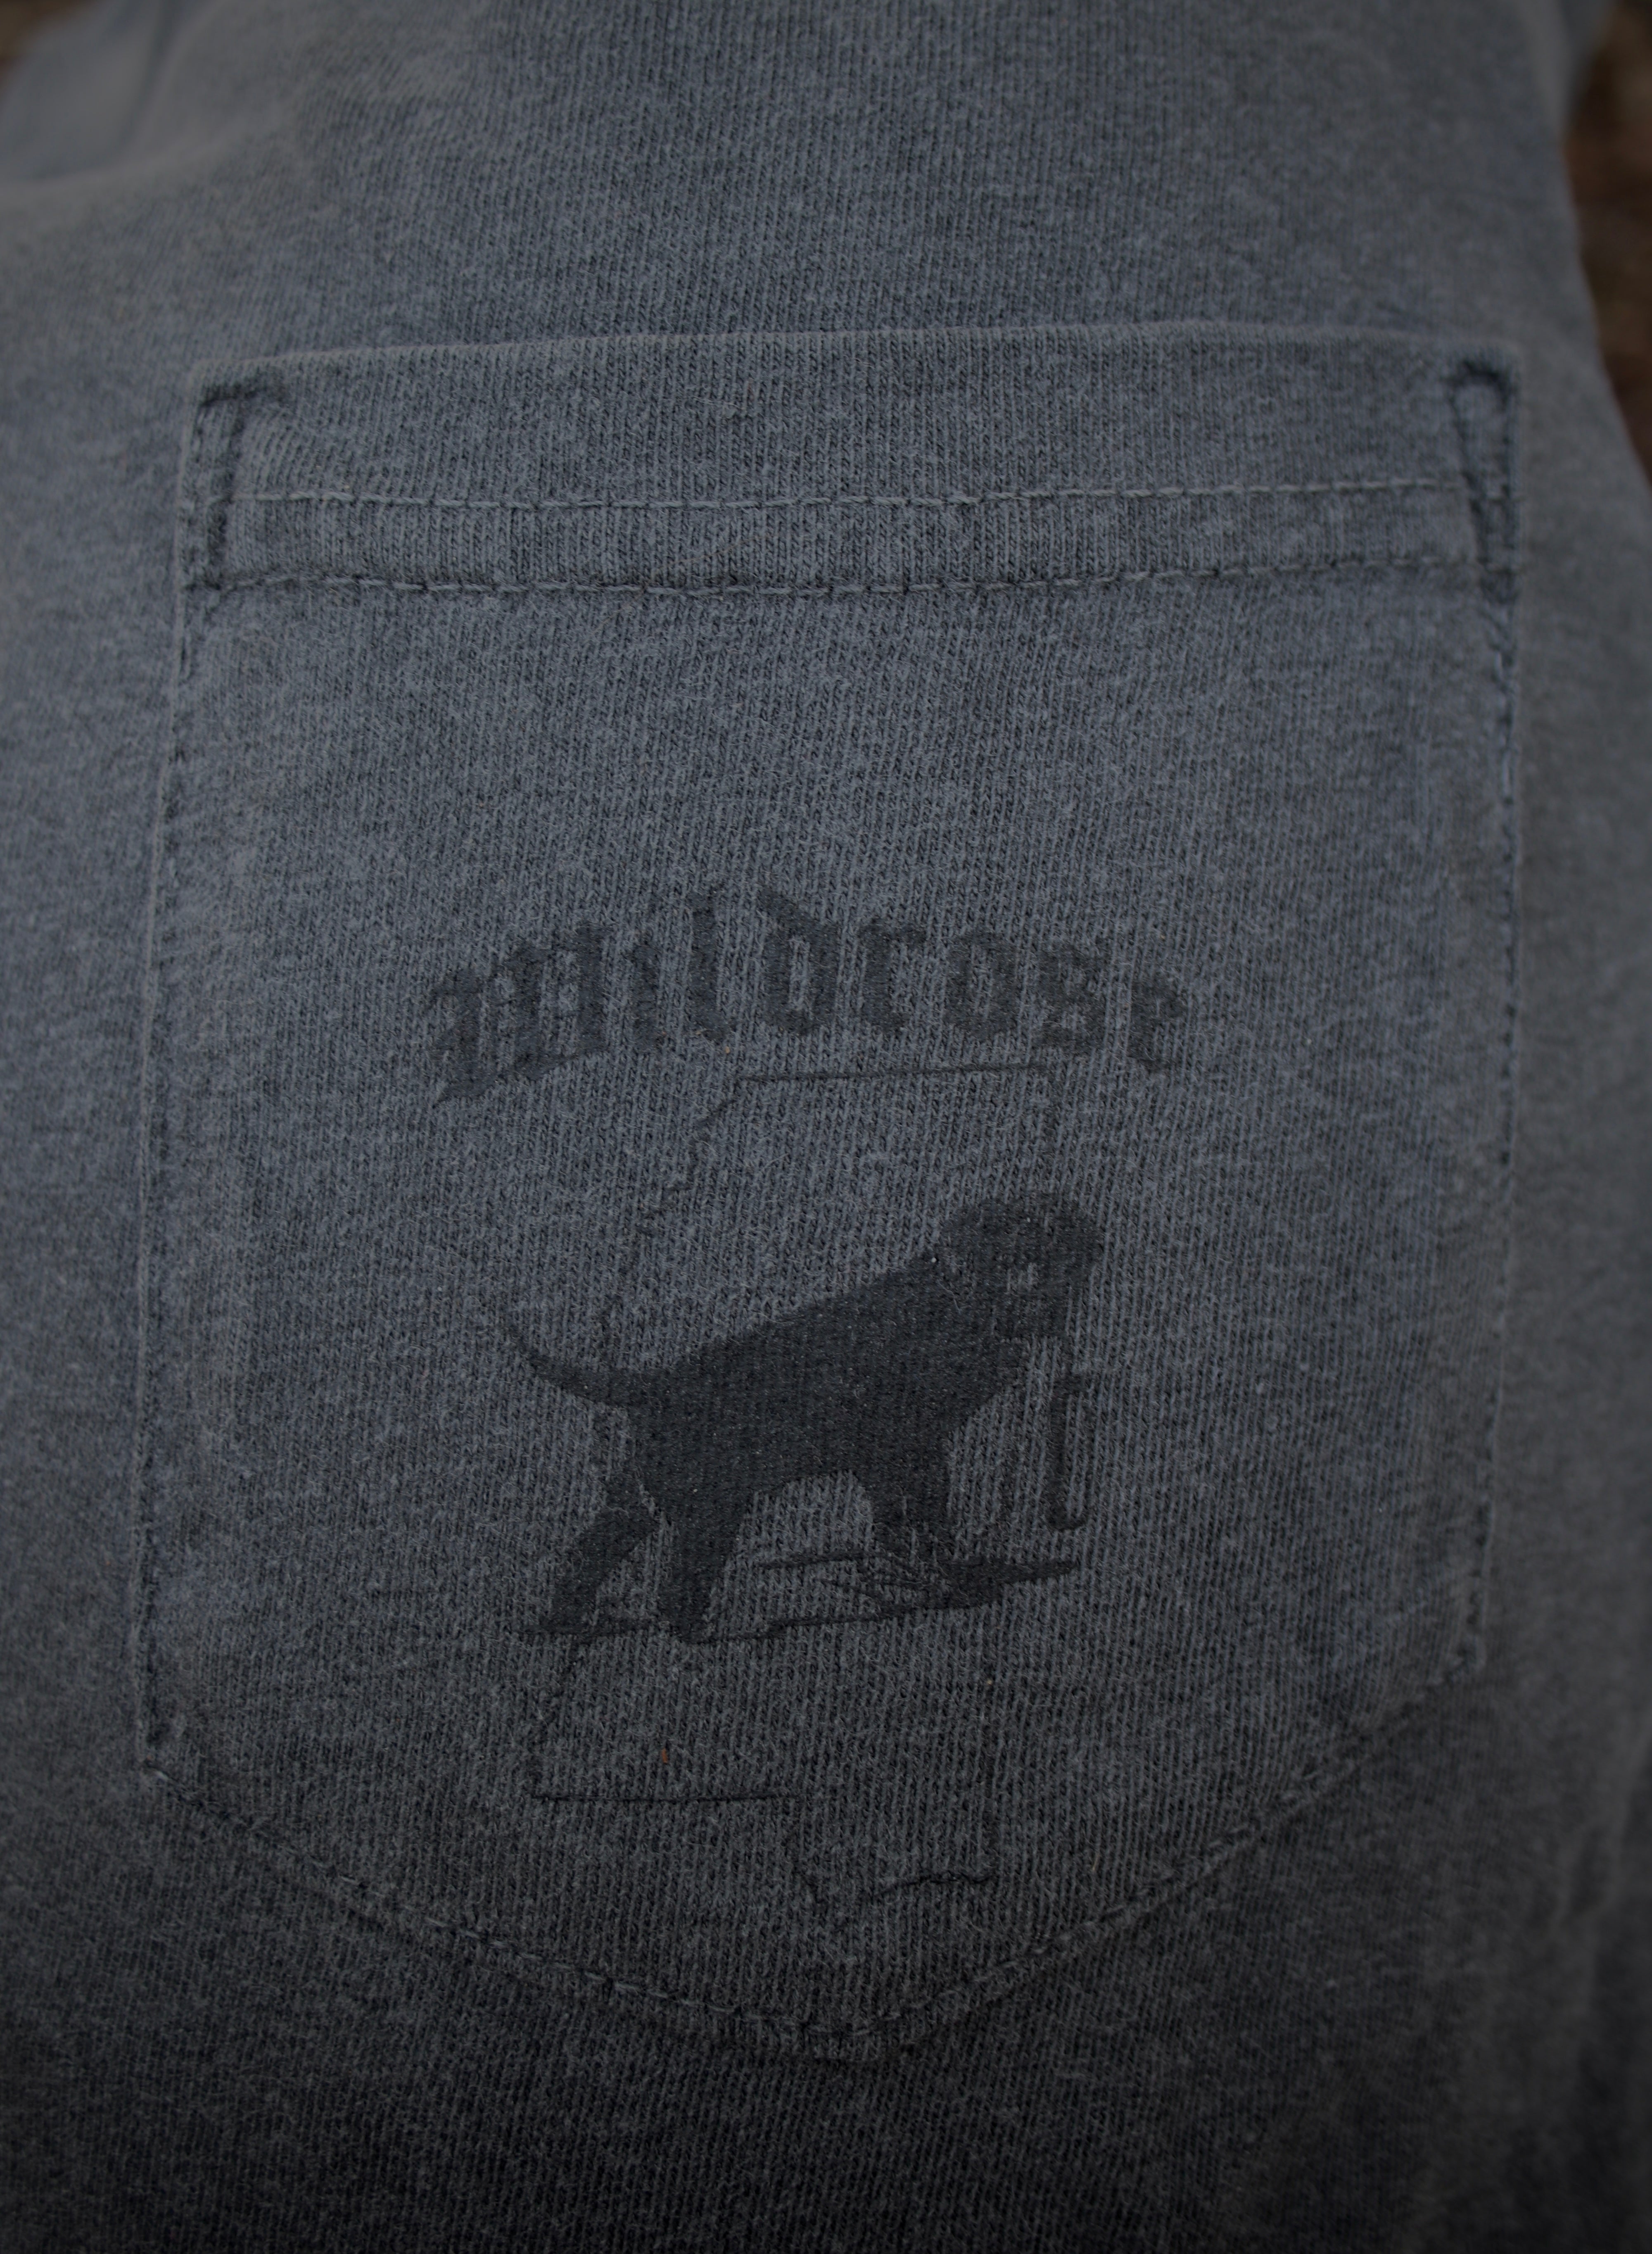 Wildrose T-Shirts: Mississippi